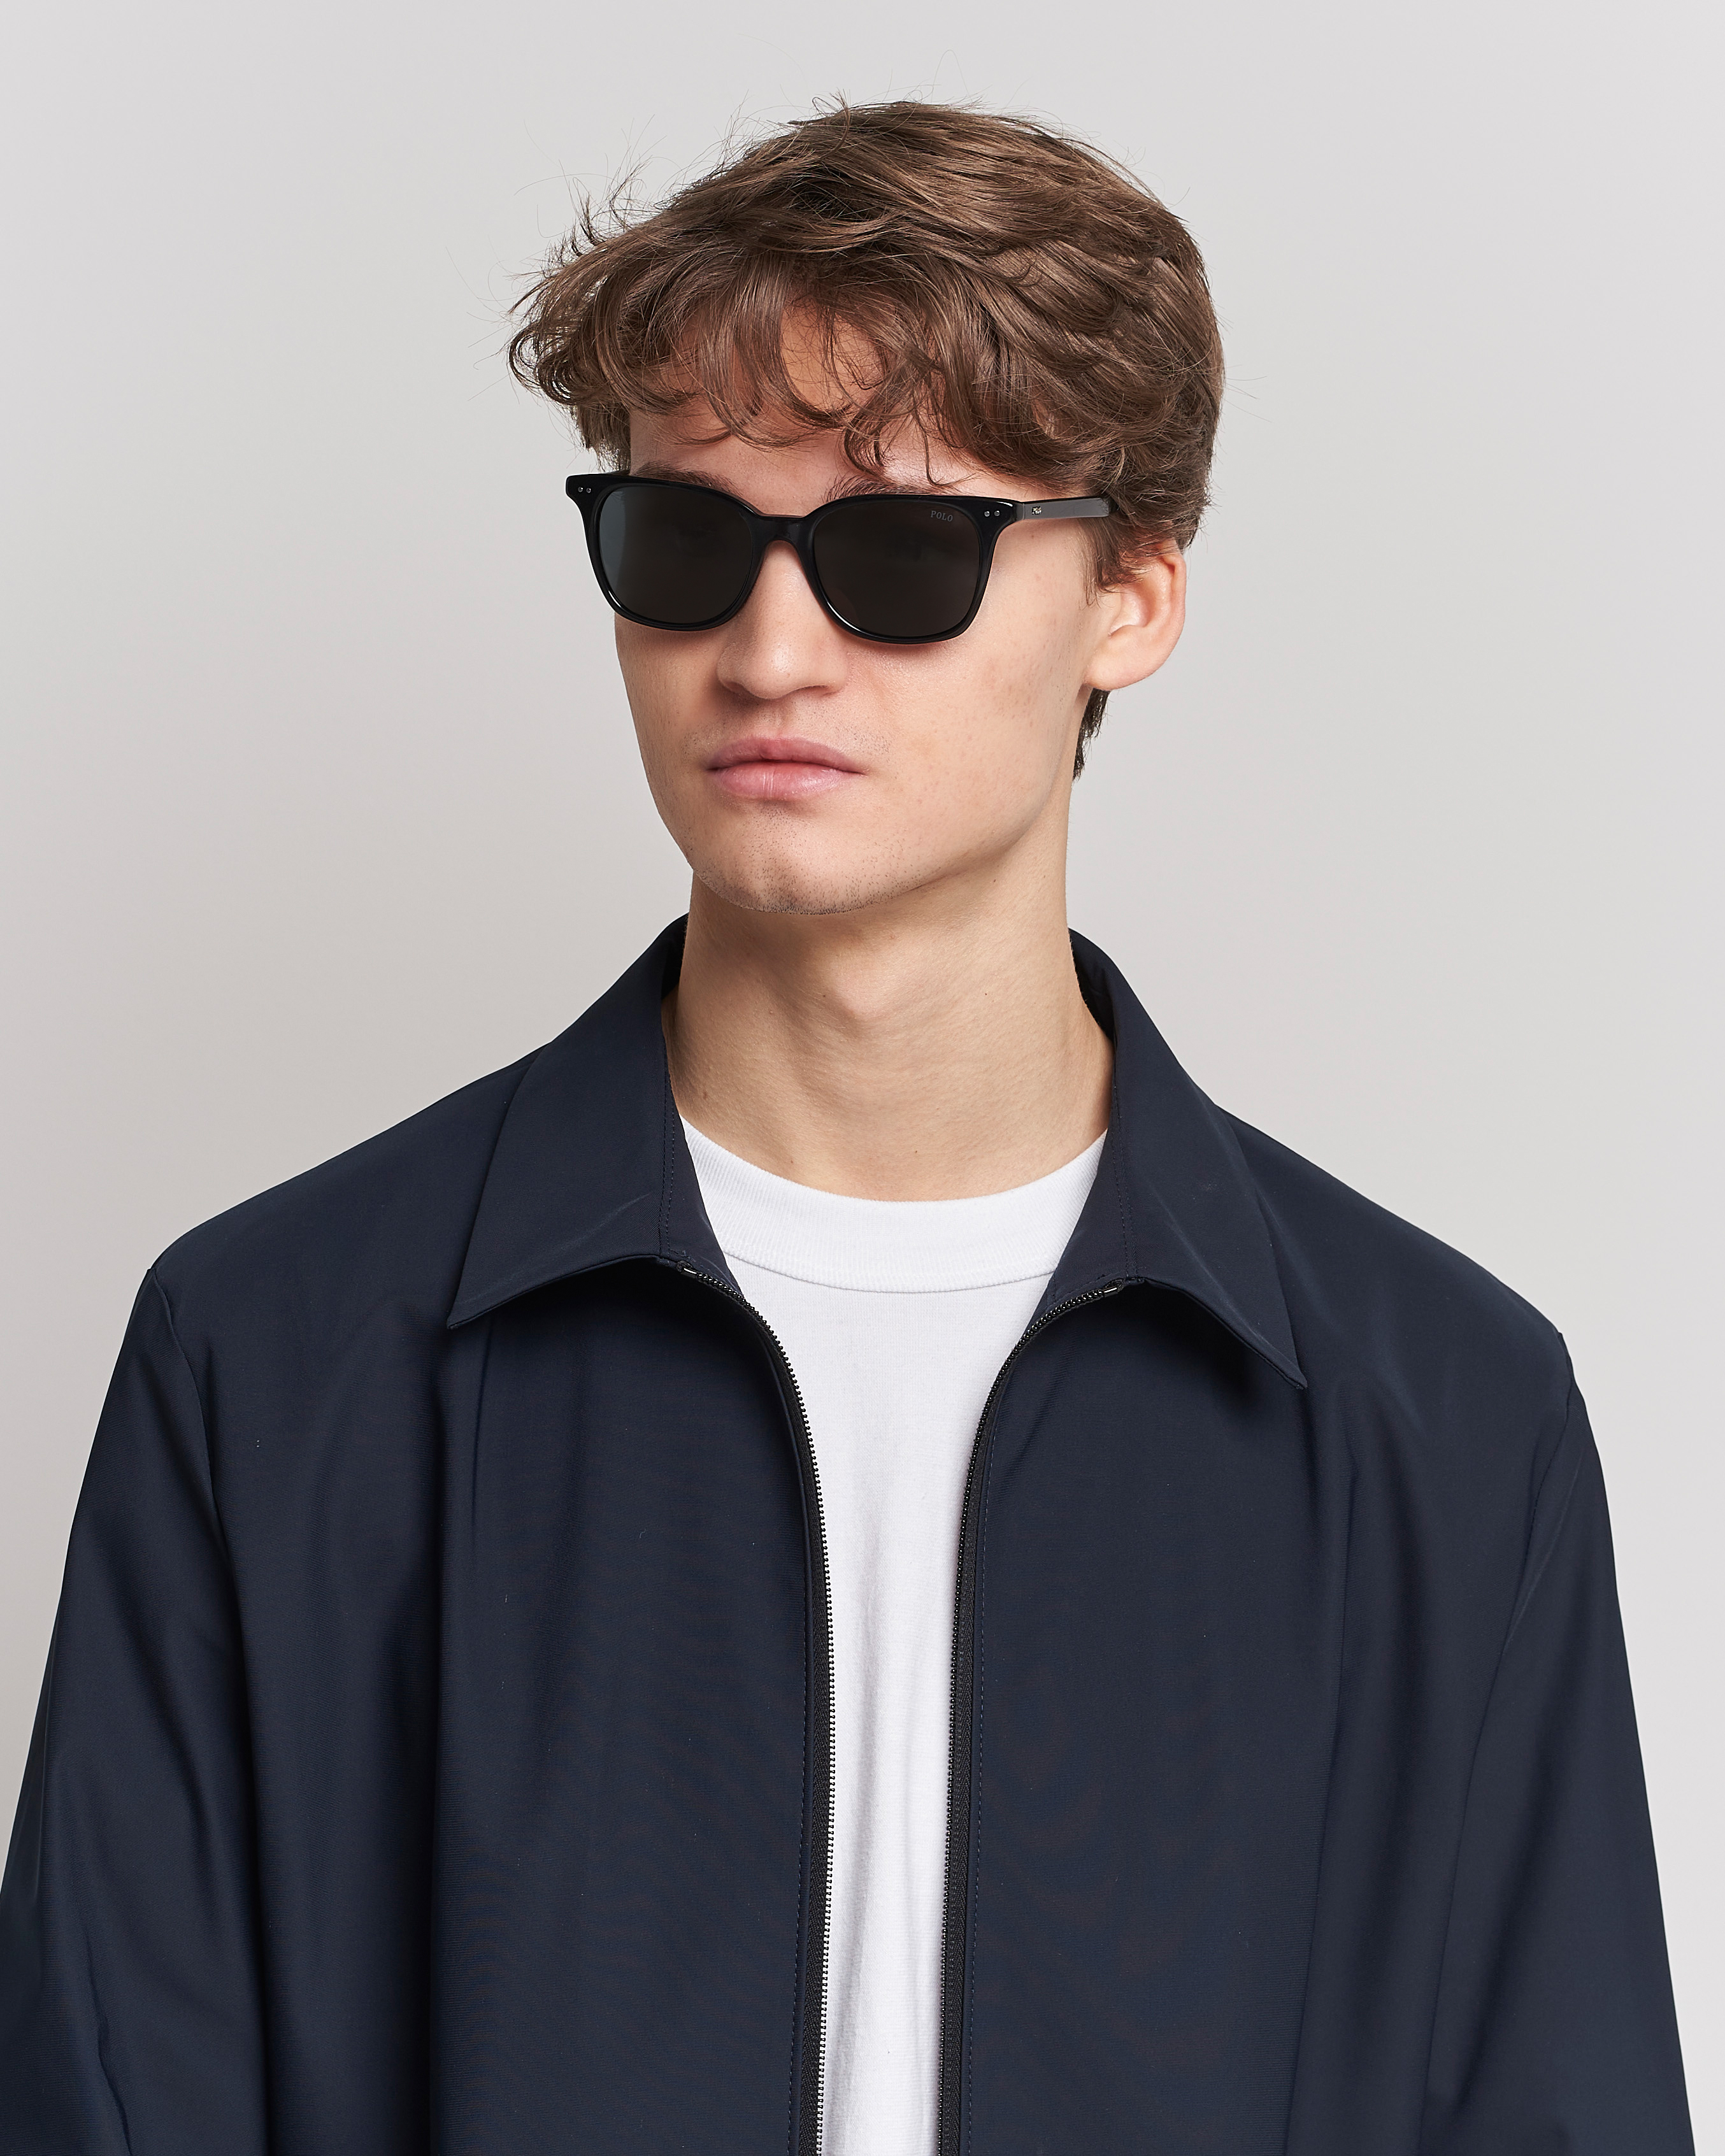 Mies |  | Polo Ralph Lauren | 0PH4187 Sunglasses Shiny Black